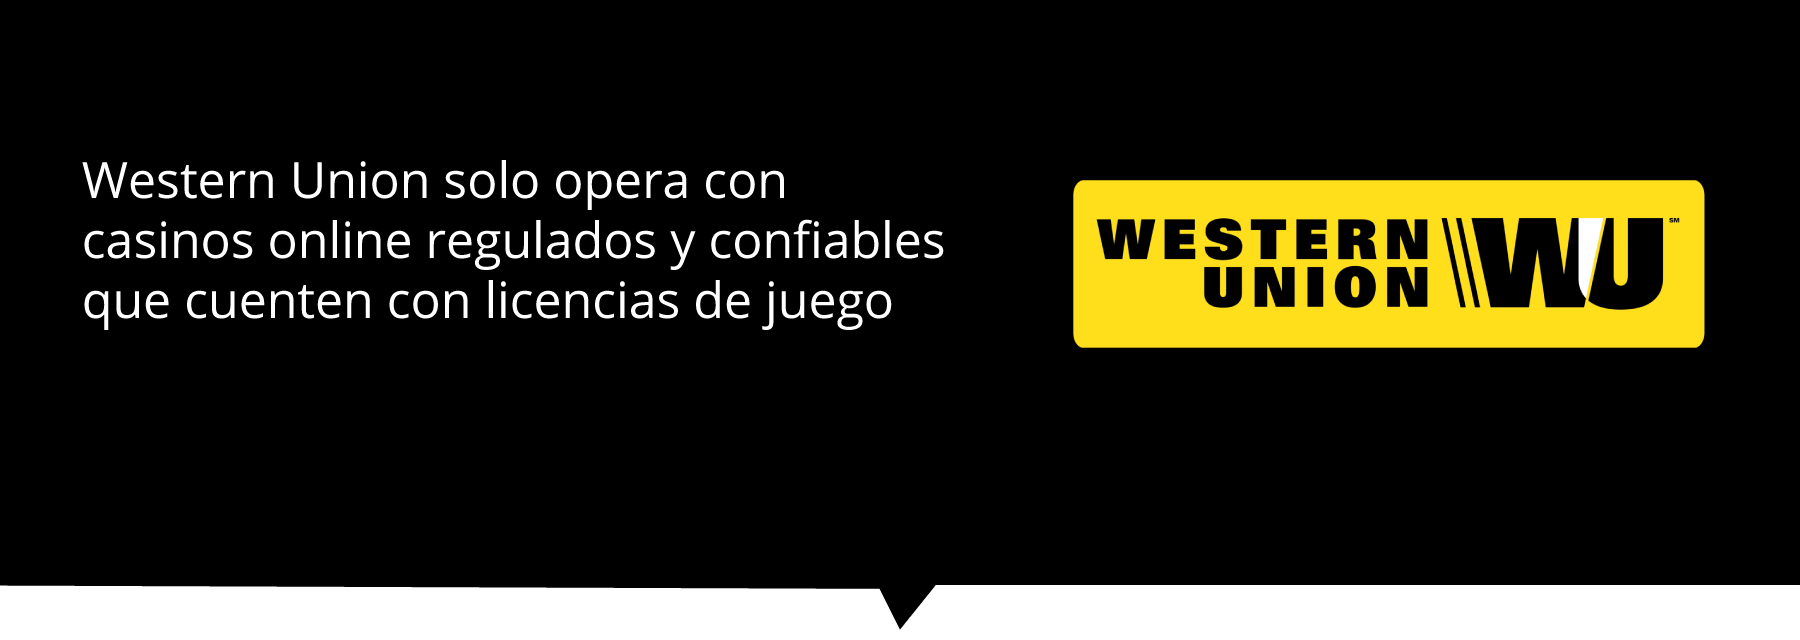 Western Union en casinos online de Latinoamérica